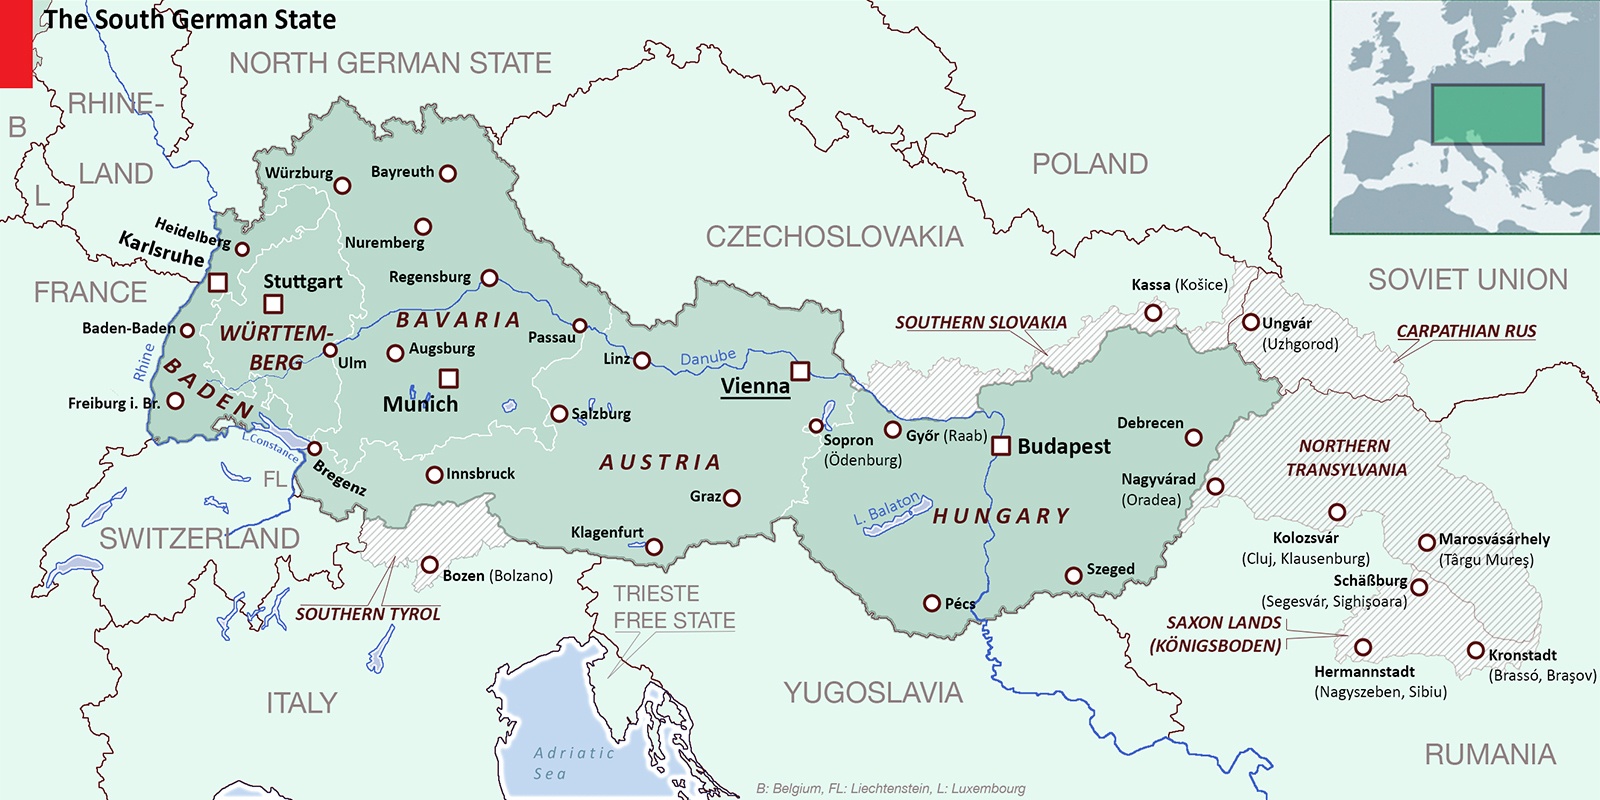 South German State map.jpg